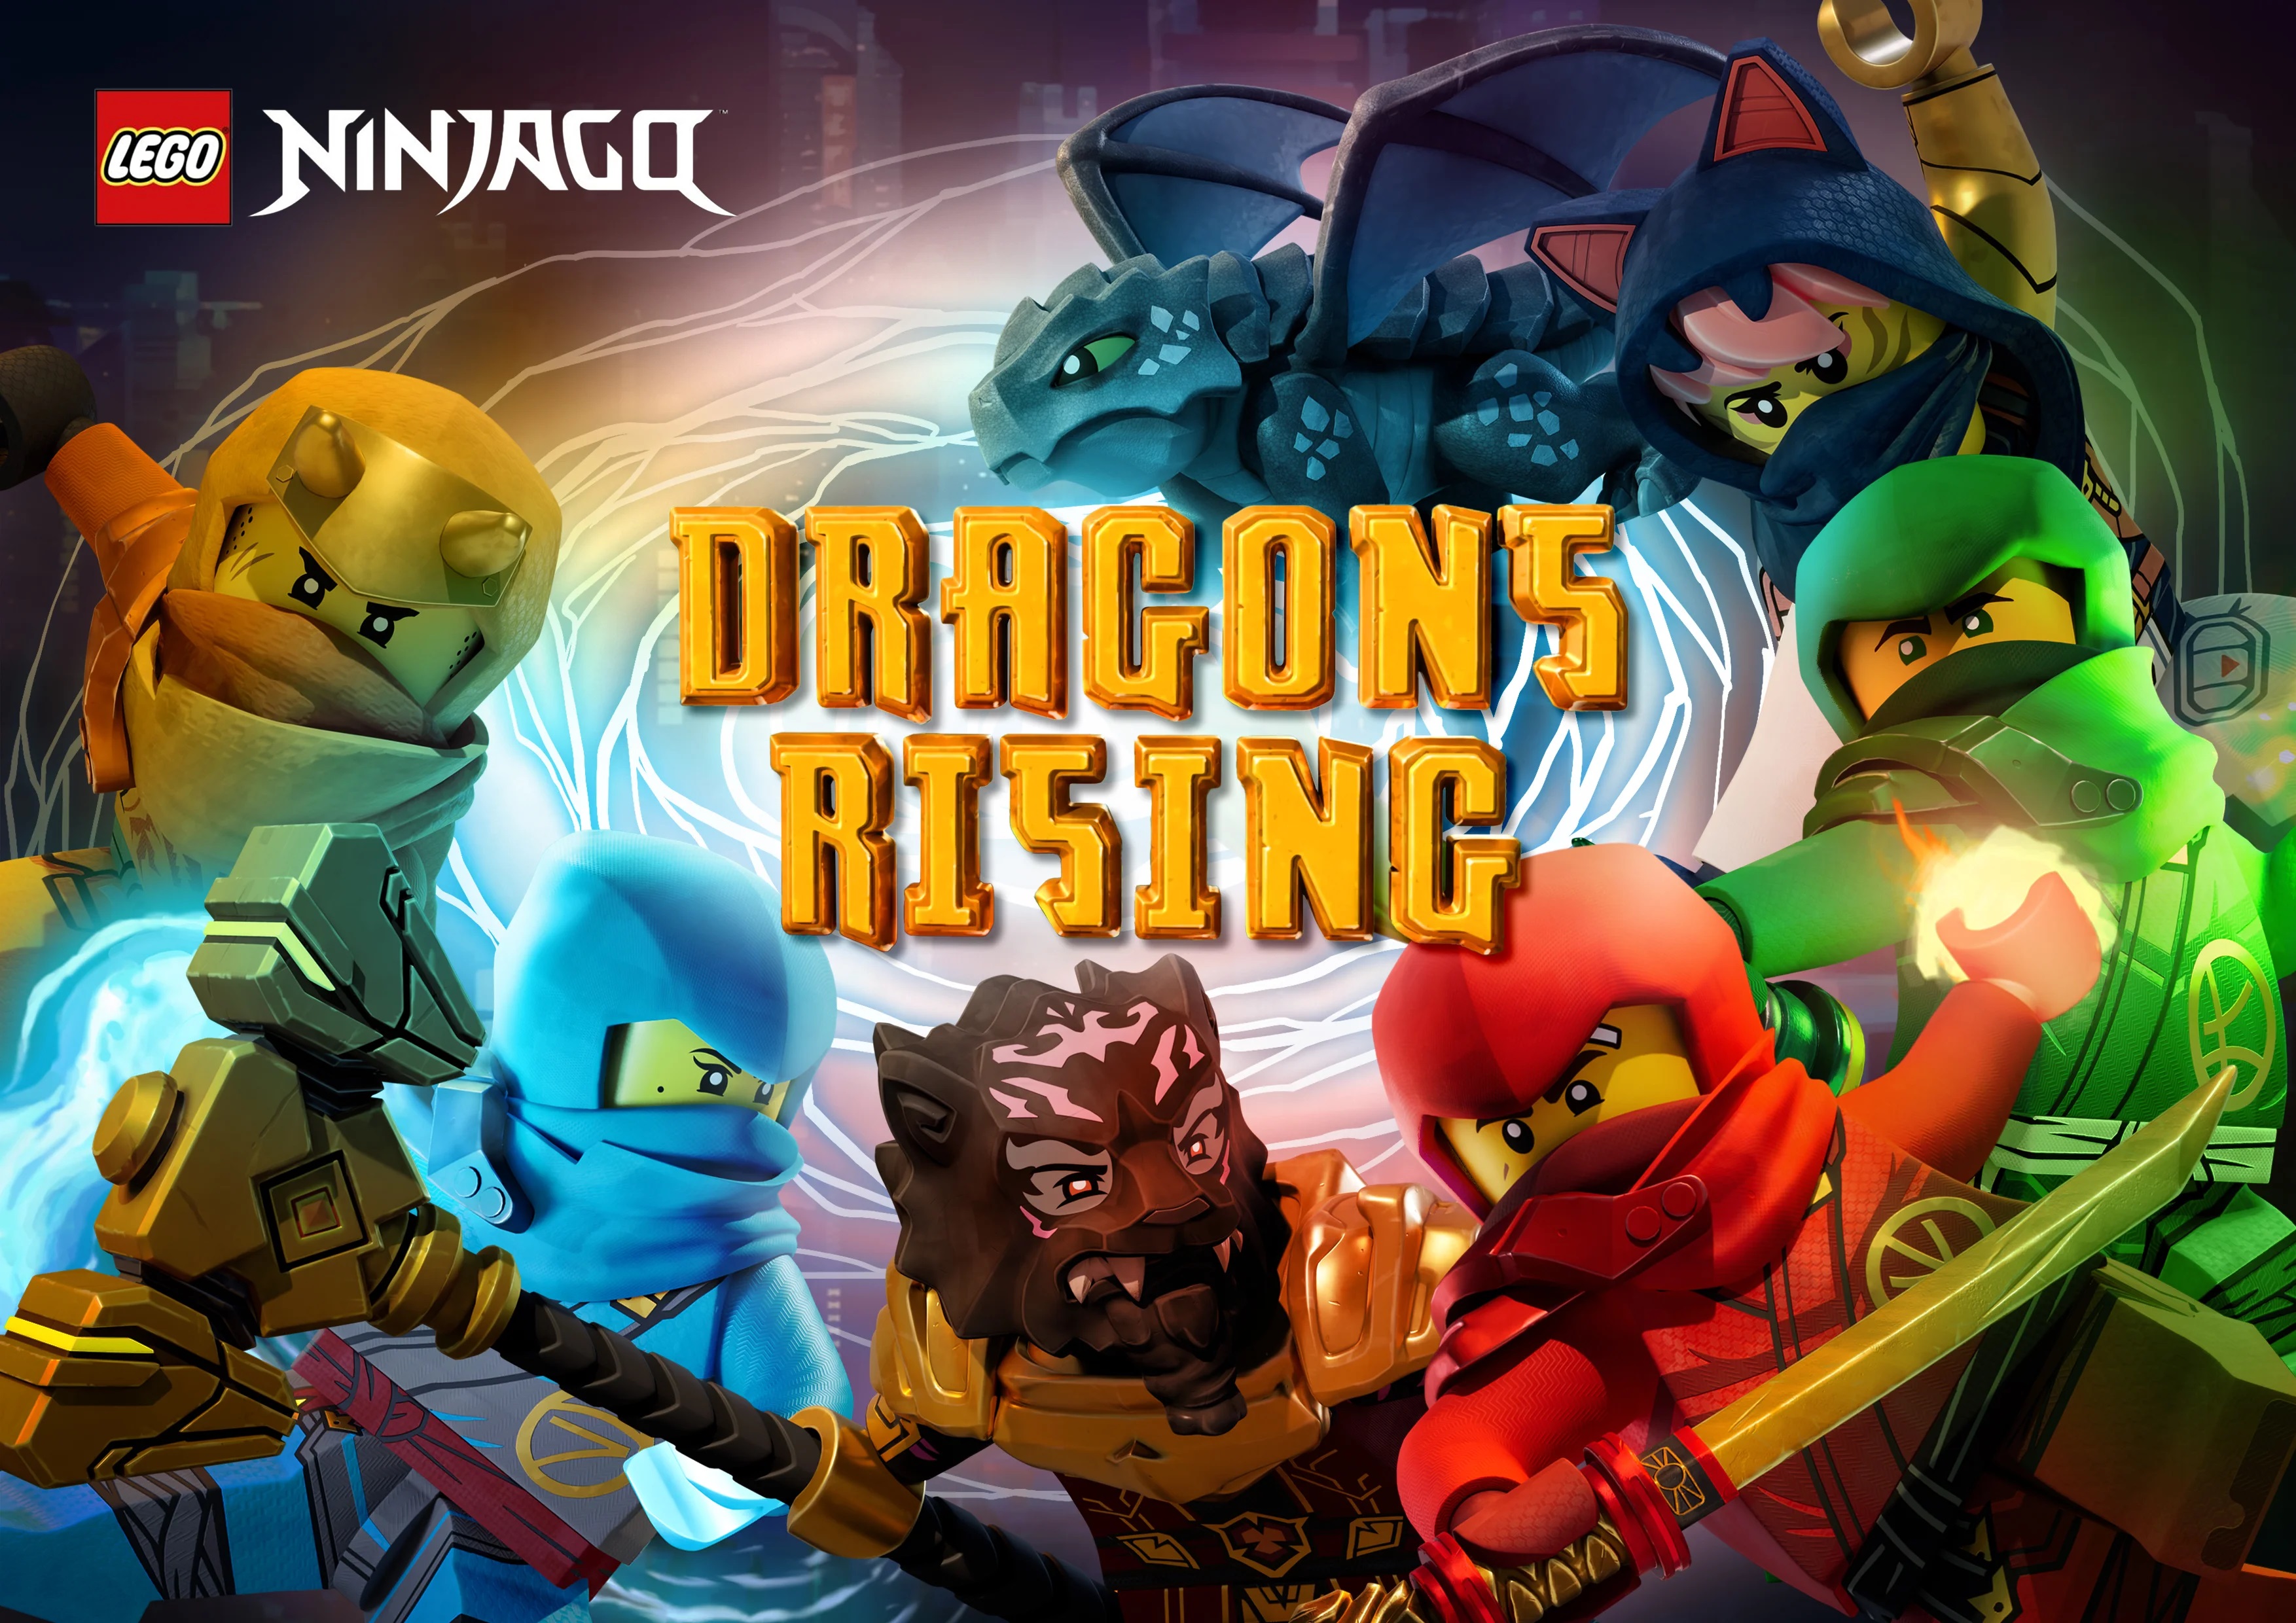 LEGO-Ninjago-Dragons-Rising-Poster-Complete